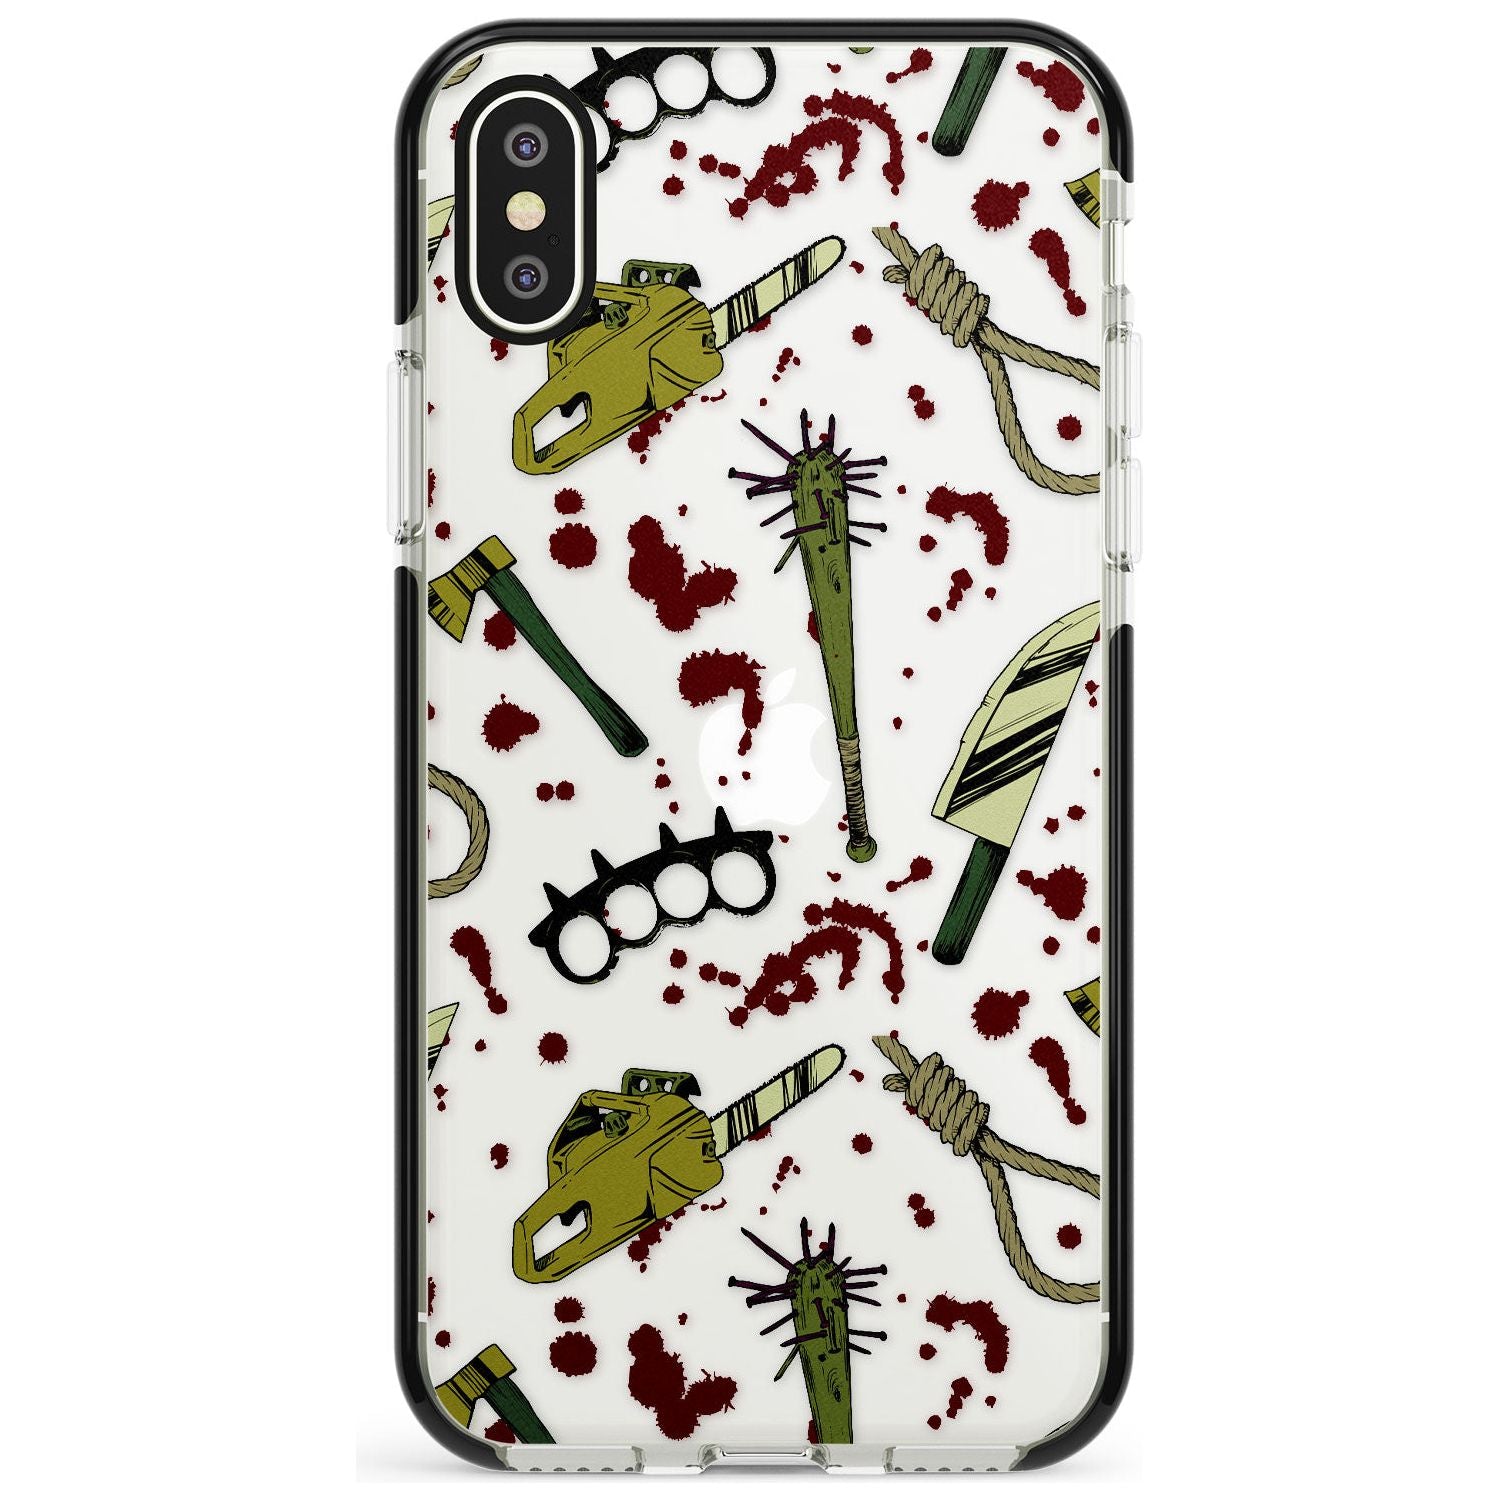 Movie Massacre Black Impact Phone Case for iPhone X XS Max XR